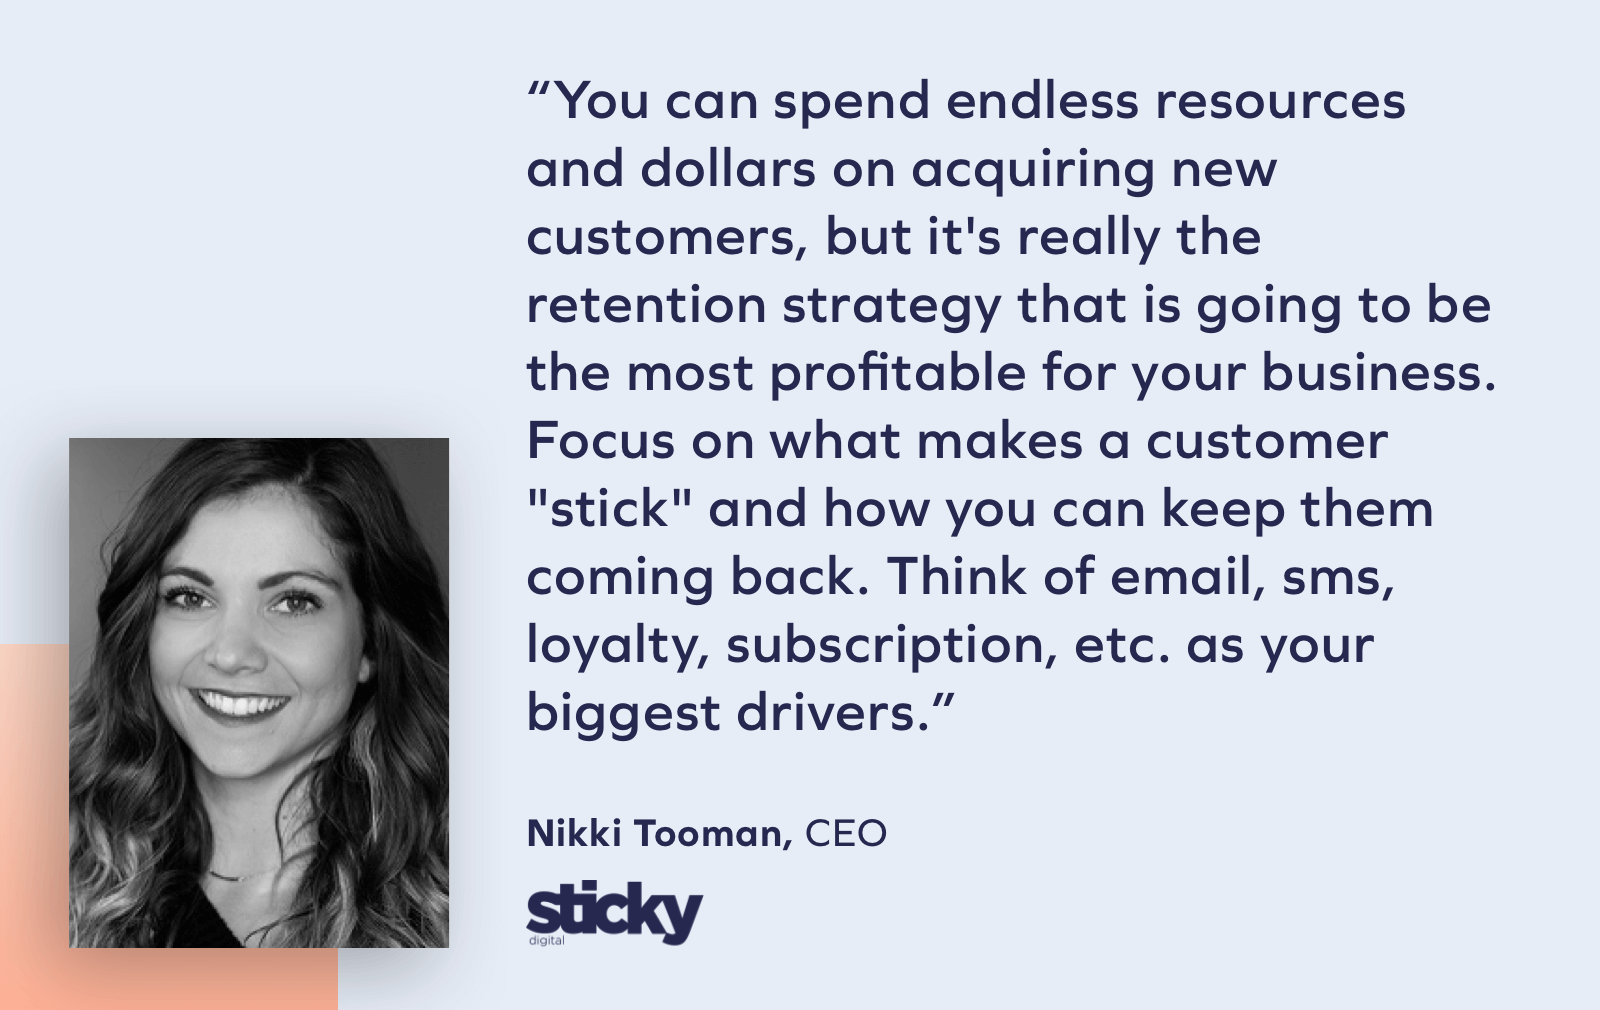 Nikki Tooman, CEO of Sticky Digital